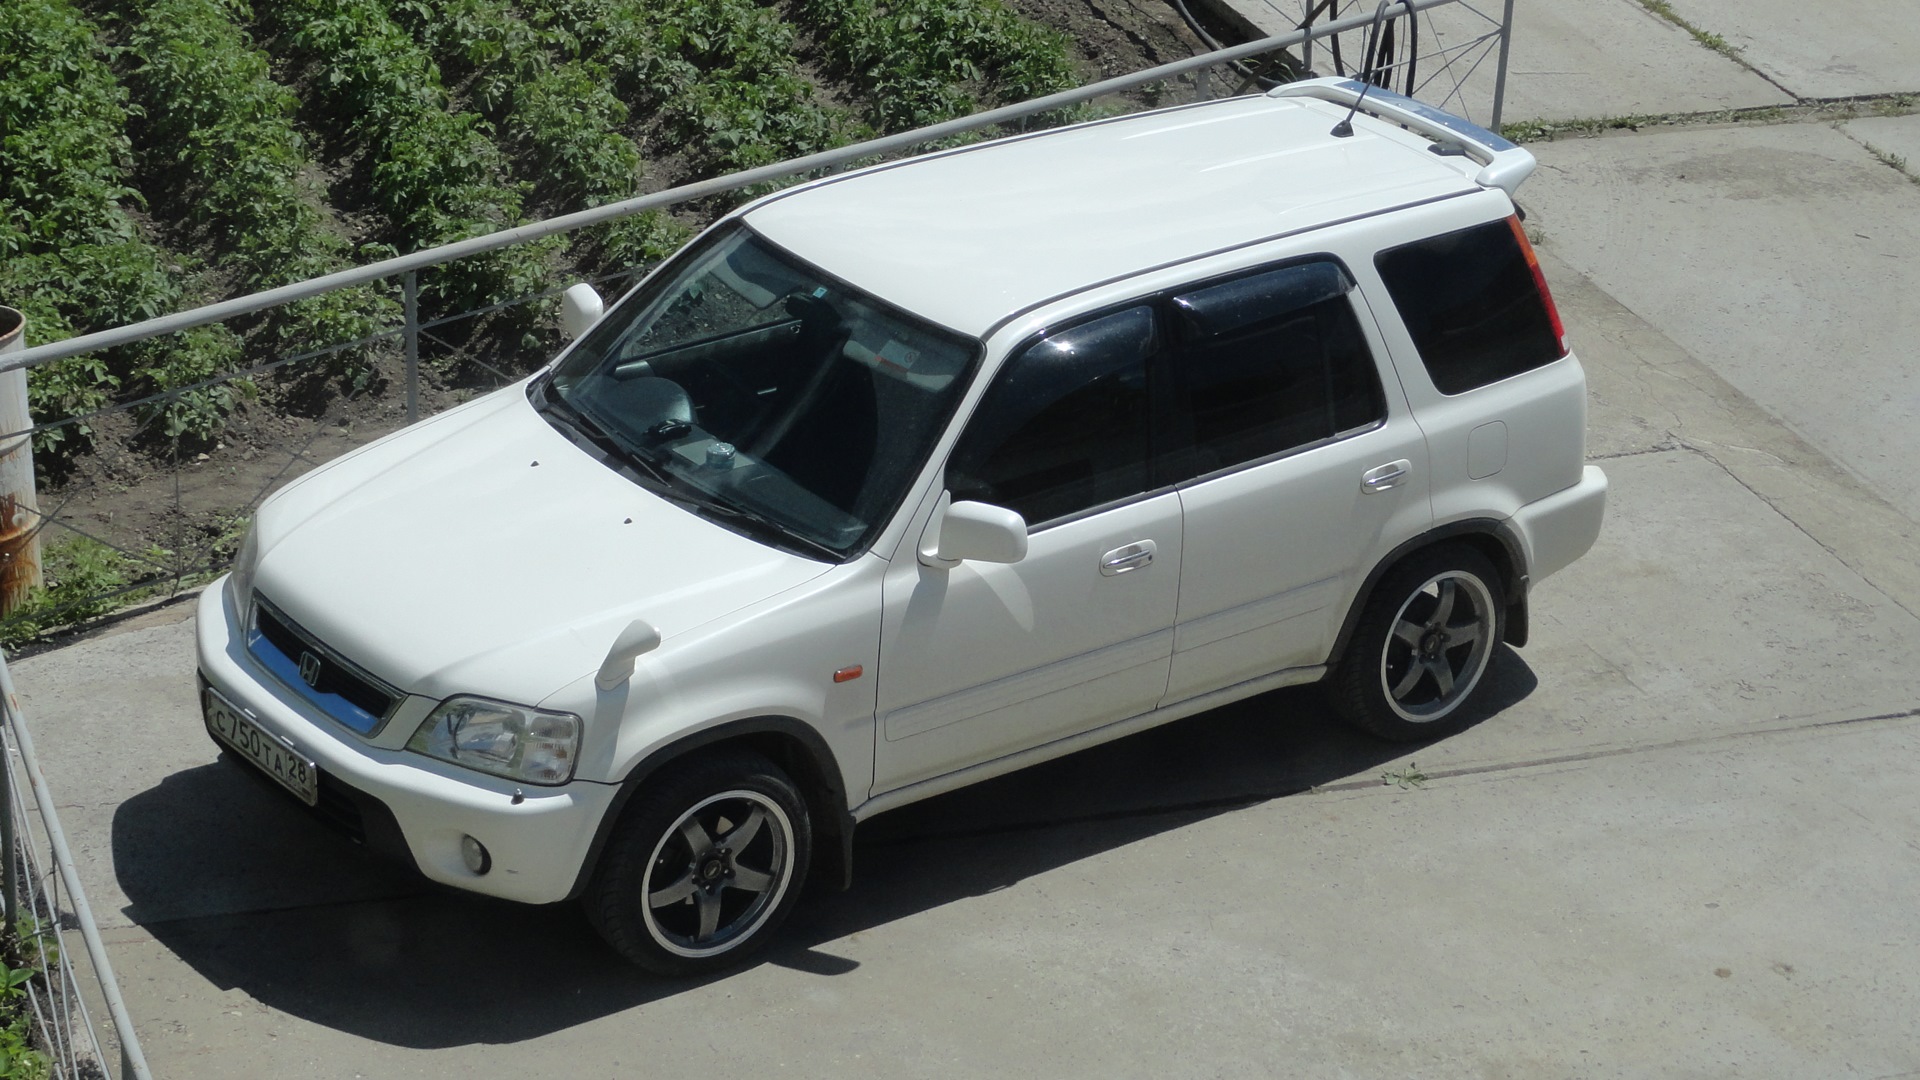 Хонда срв рд1 купить в новосибирске. Honda CRV rd1. Honda CR-V 1999. Honda CRV rd1 White. Honda CRV 1999.